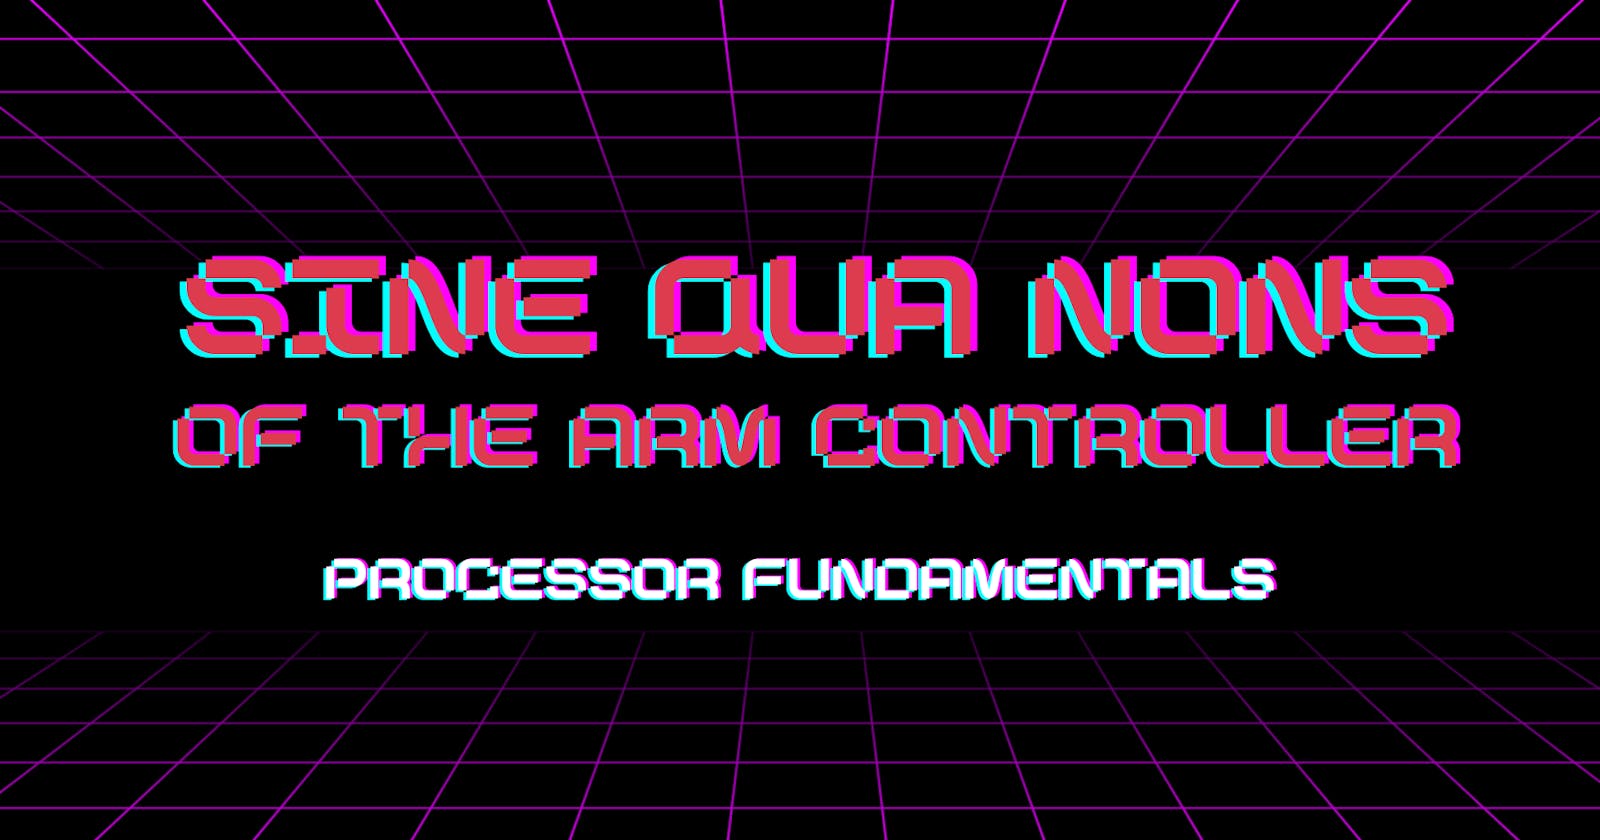 Sine Qua Nons of the ARM Controller - Processor Fundamentals